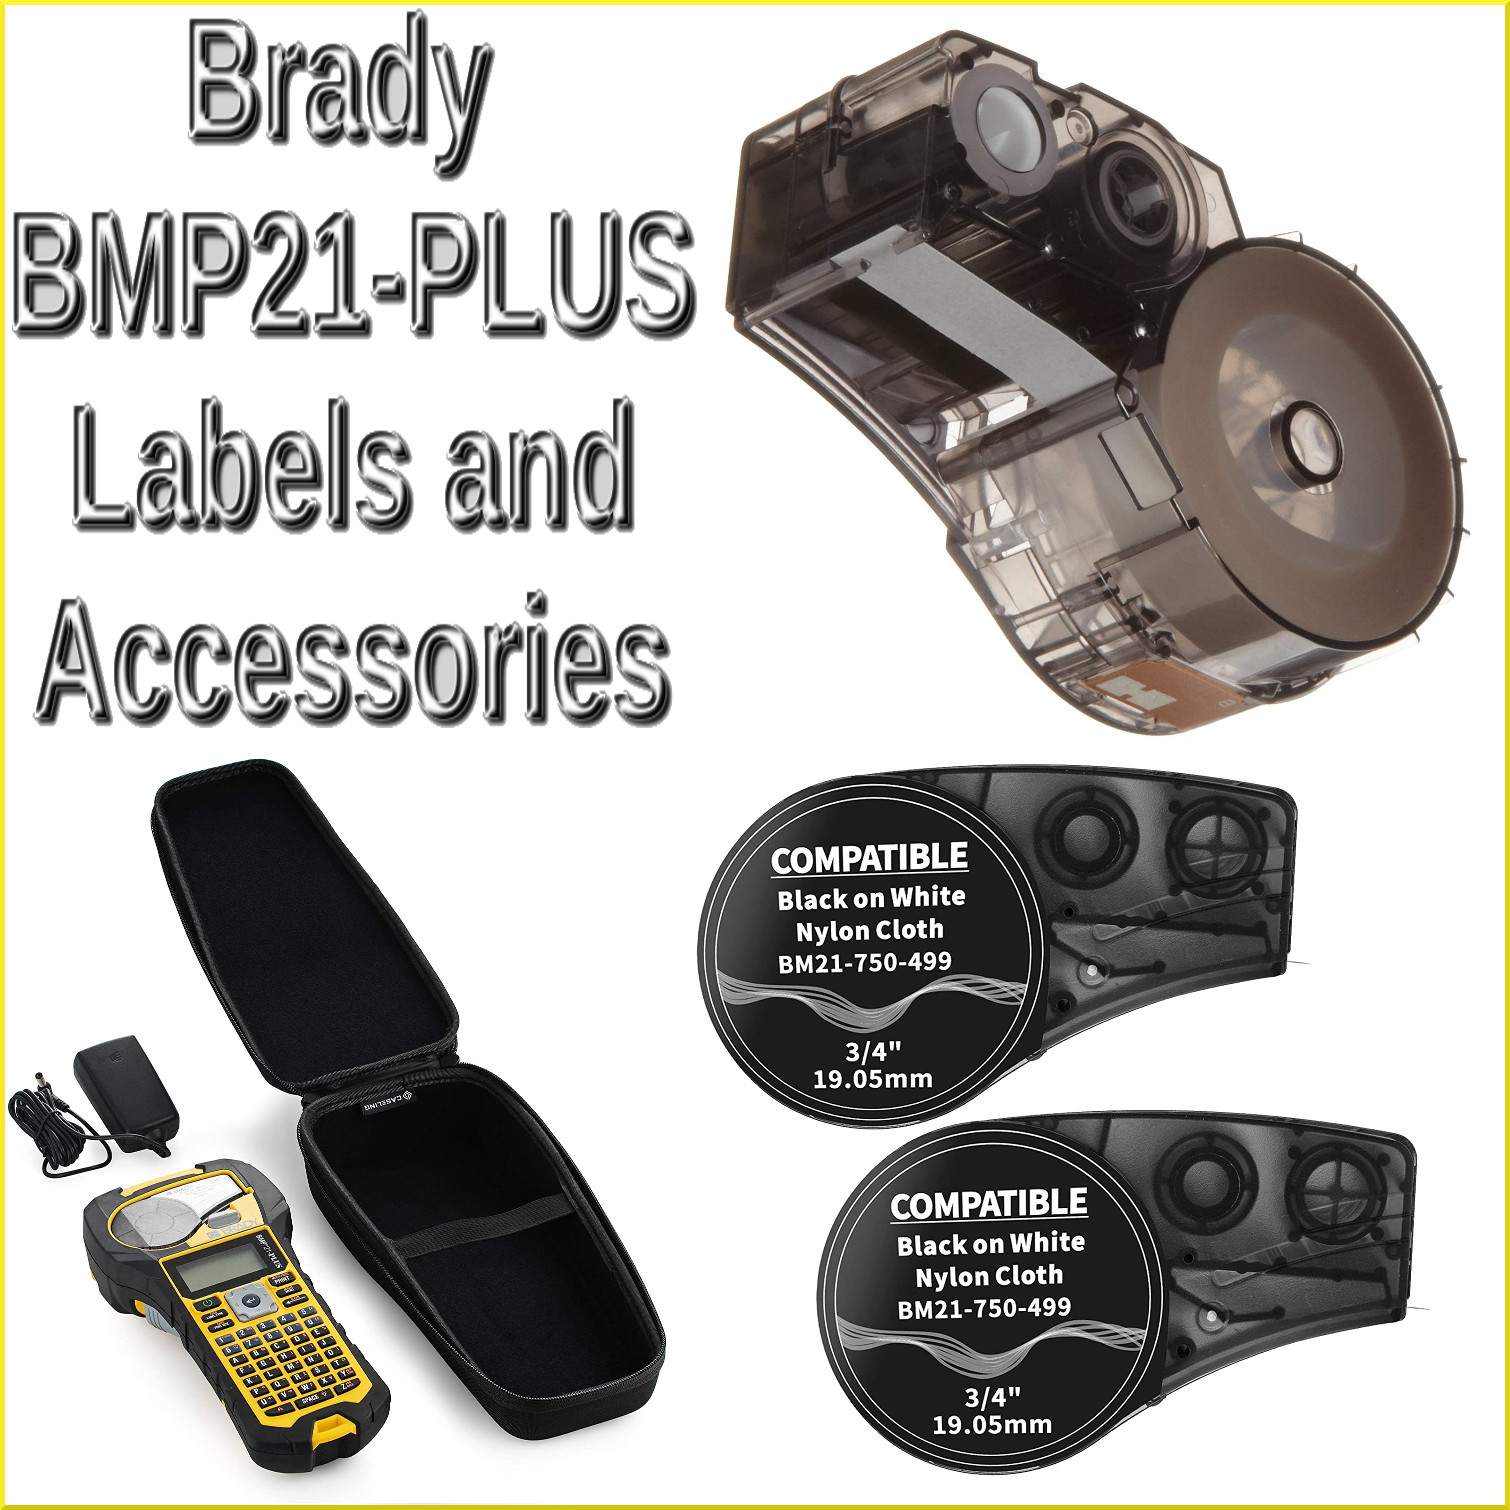 Brady BMP21-PLUS labels 